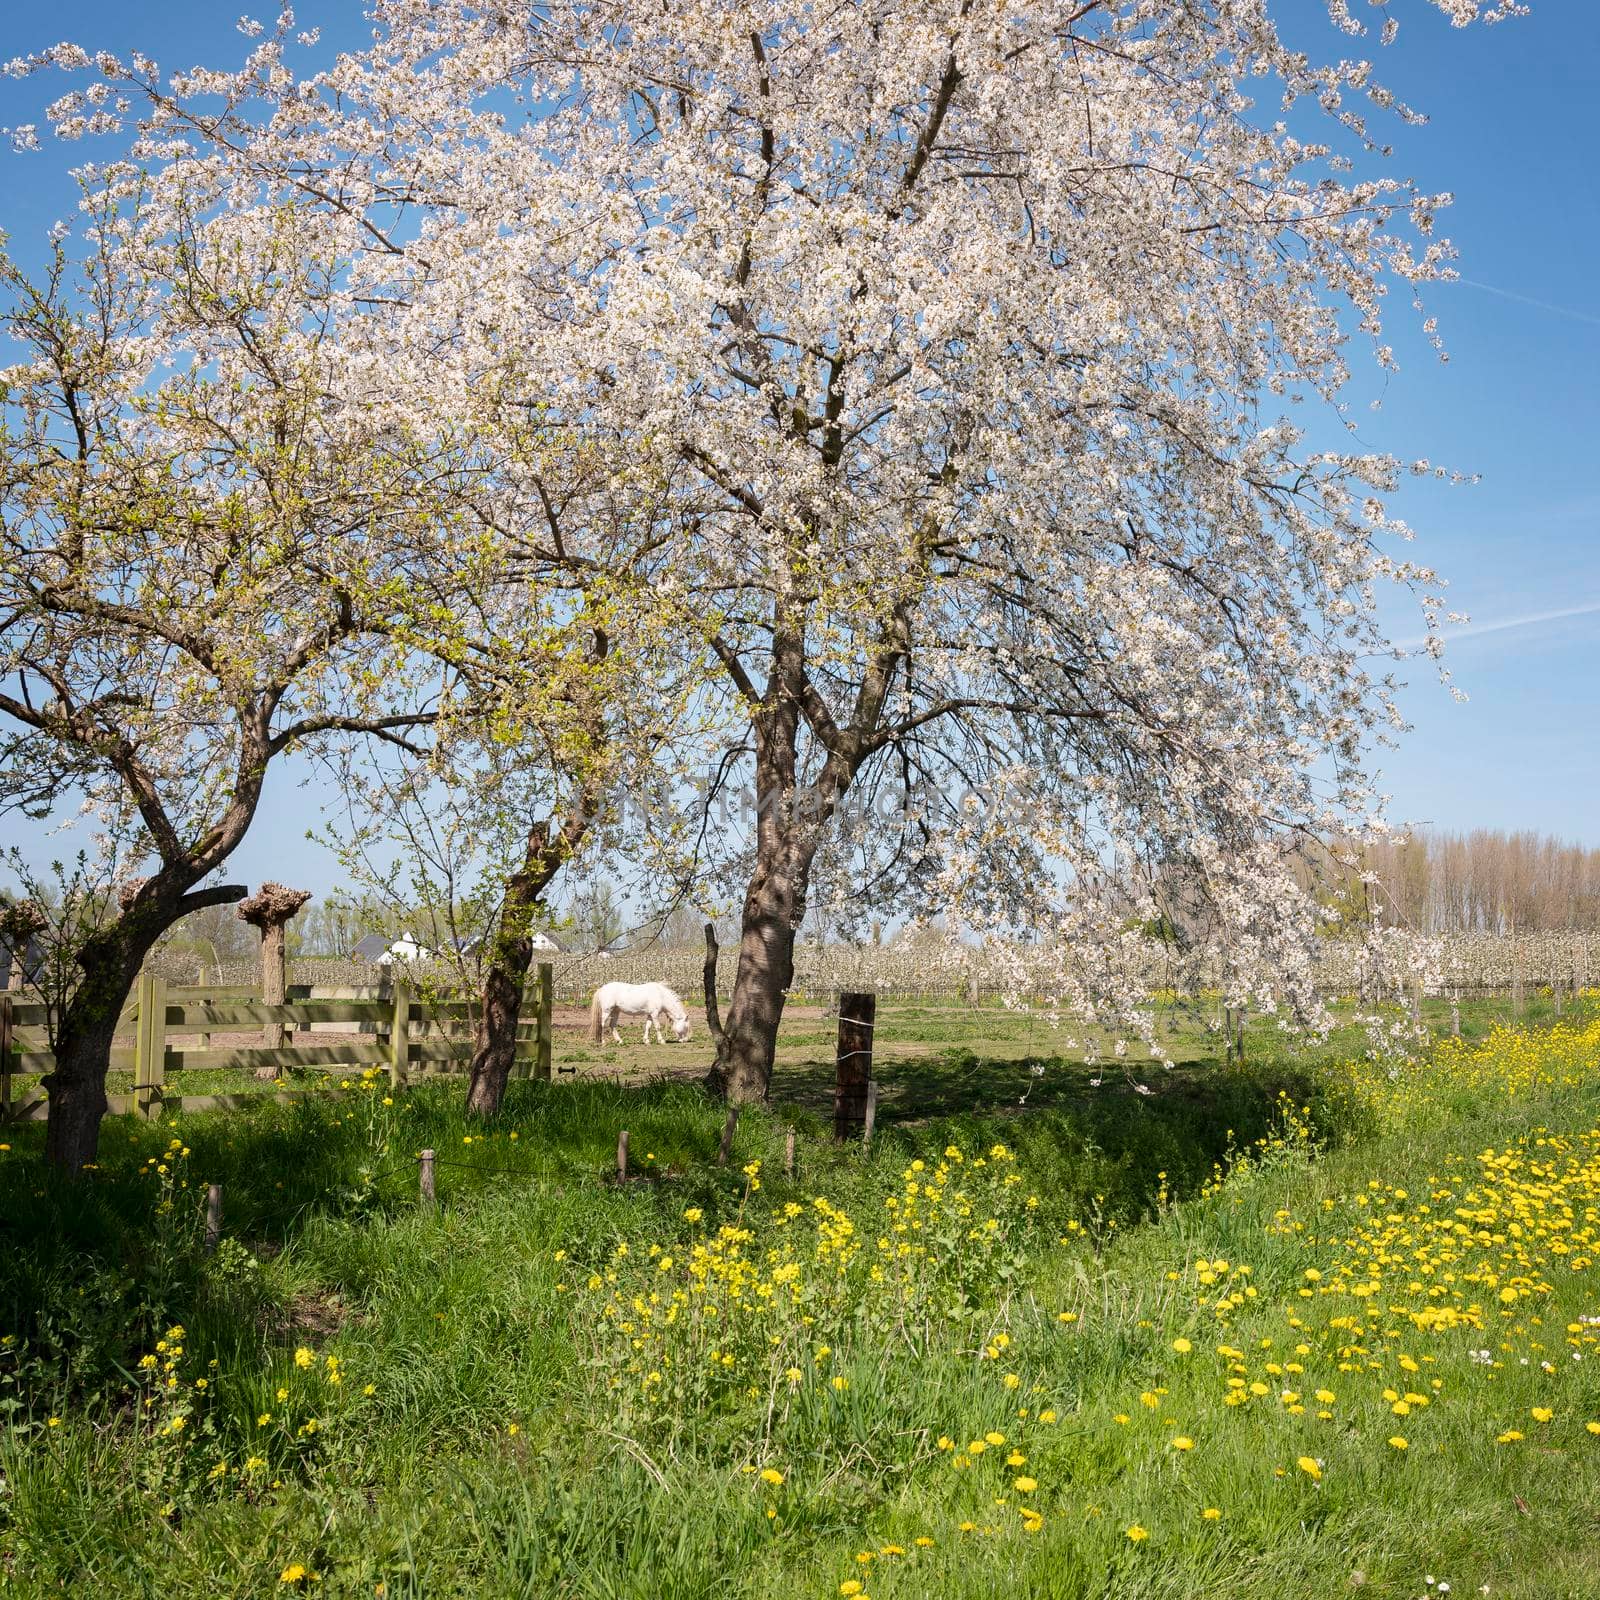 white horse amongst blossoming spring flowers in the netherlands under blue sky by ahavelaar